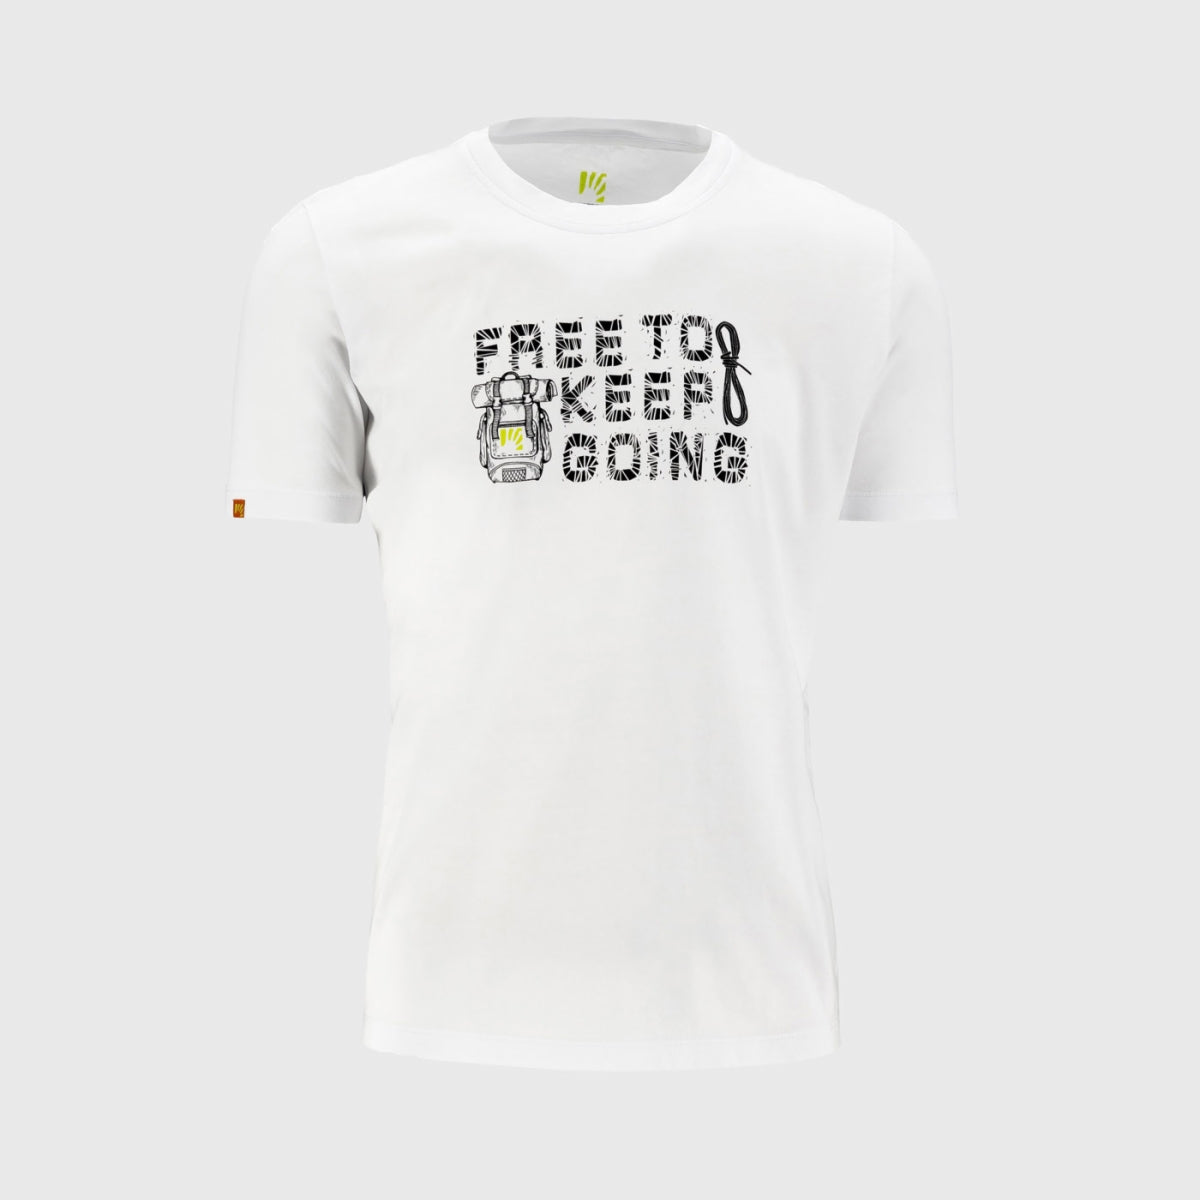 White Crocus t-shirt